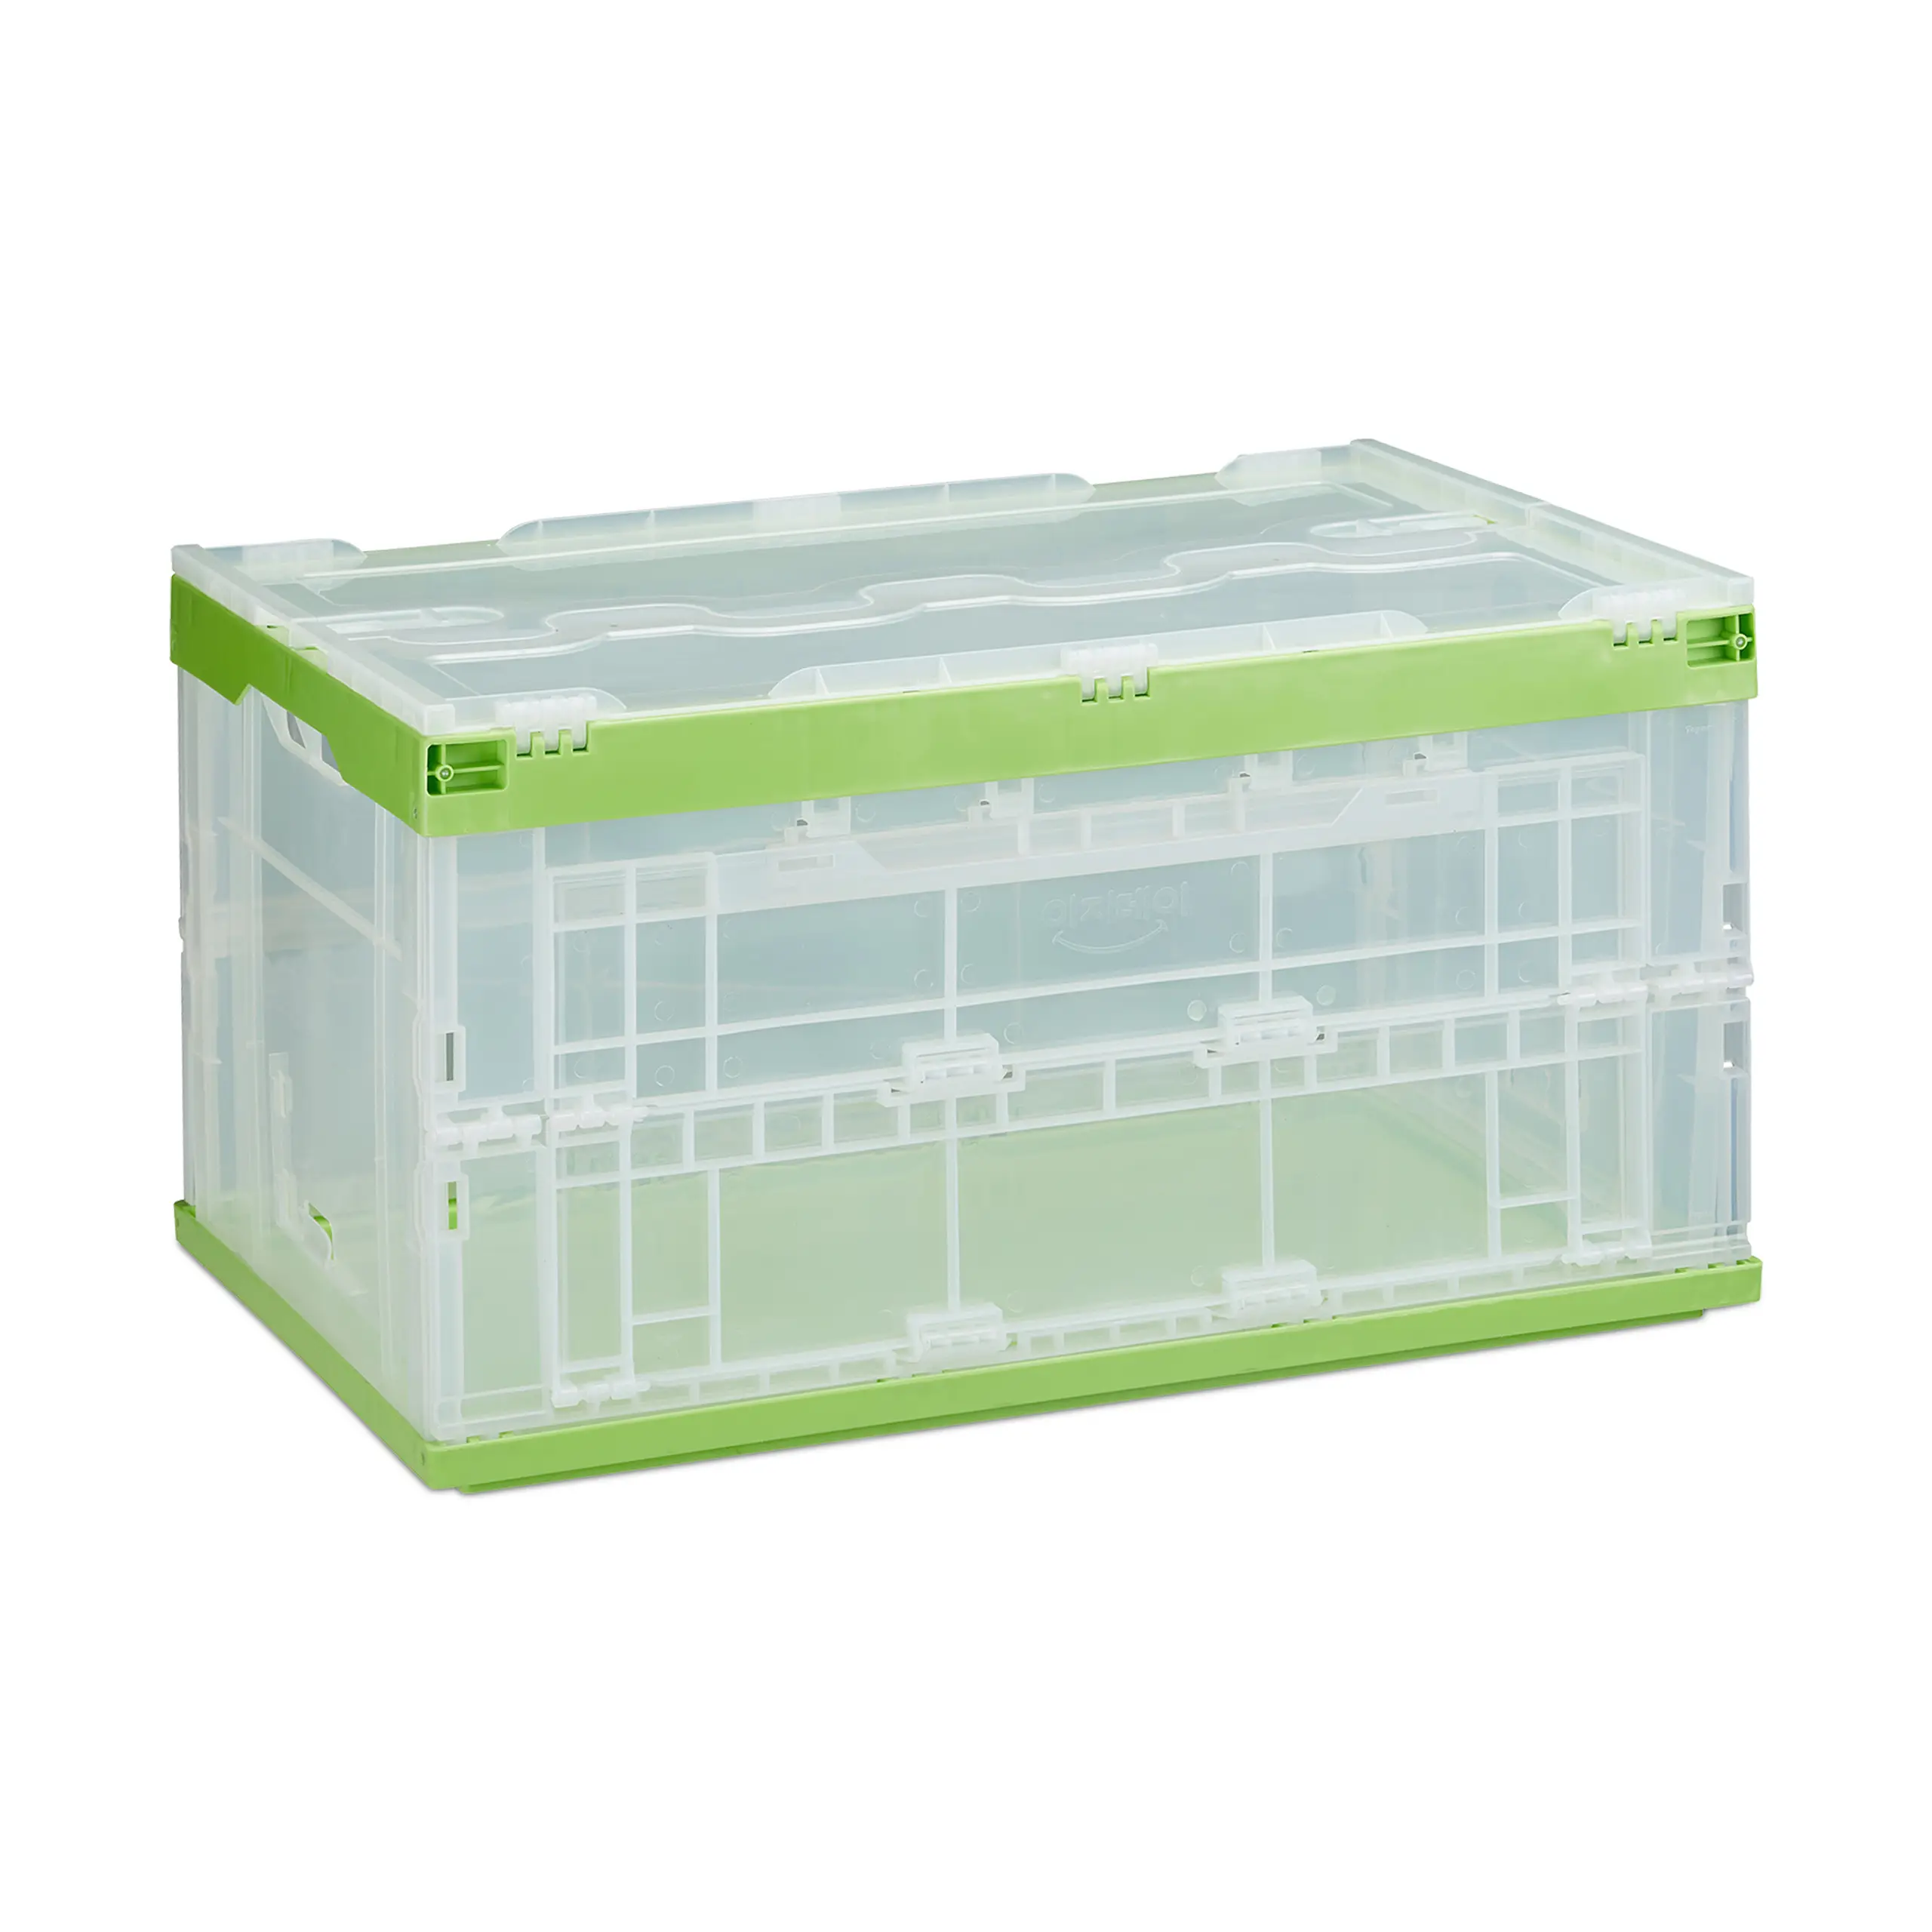 1 x Transportbox Deckel gr眉n-transparent | Kisten